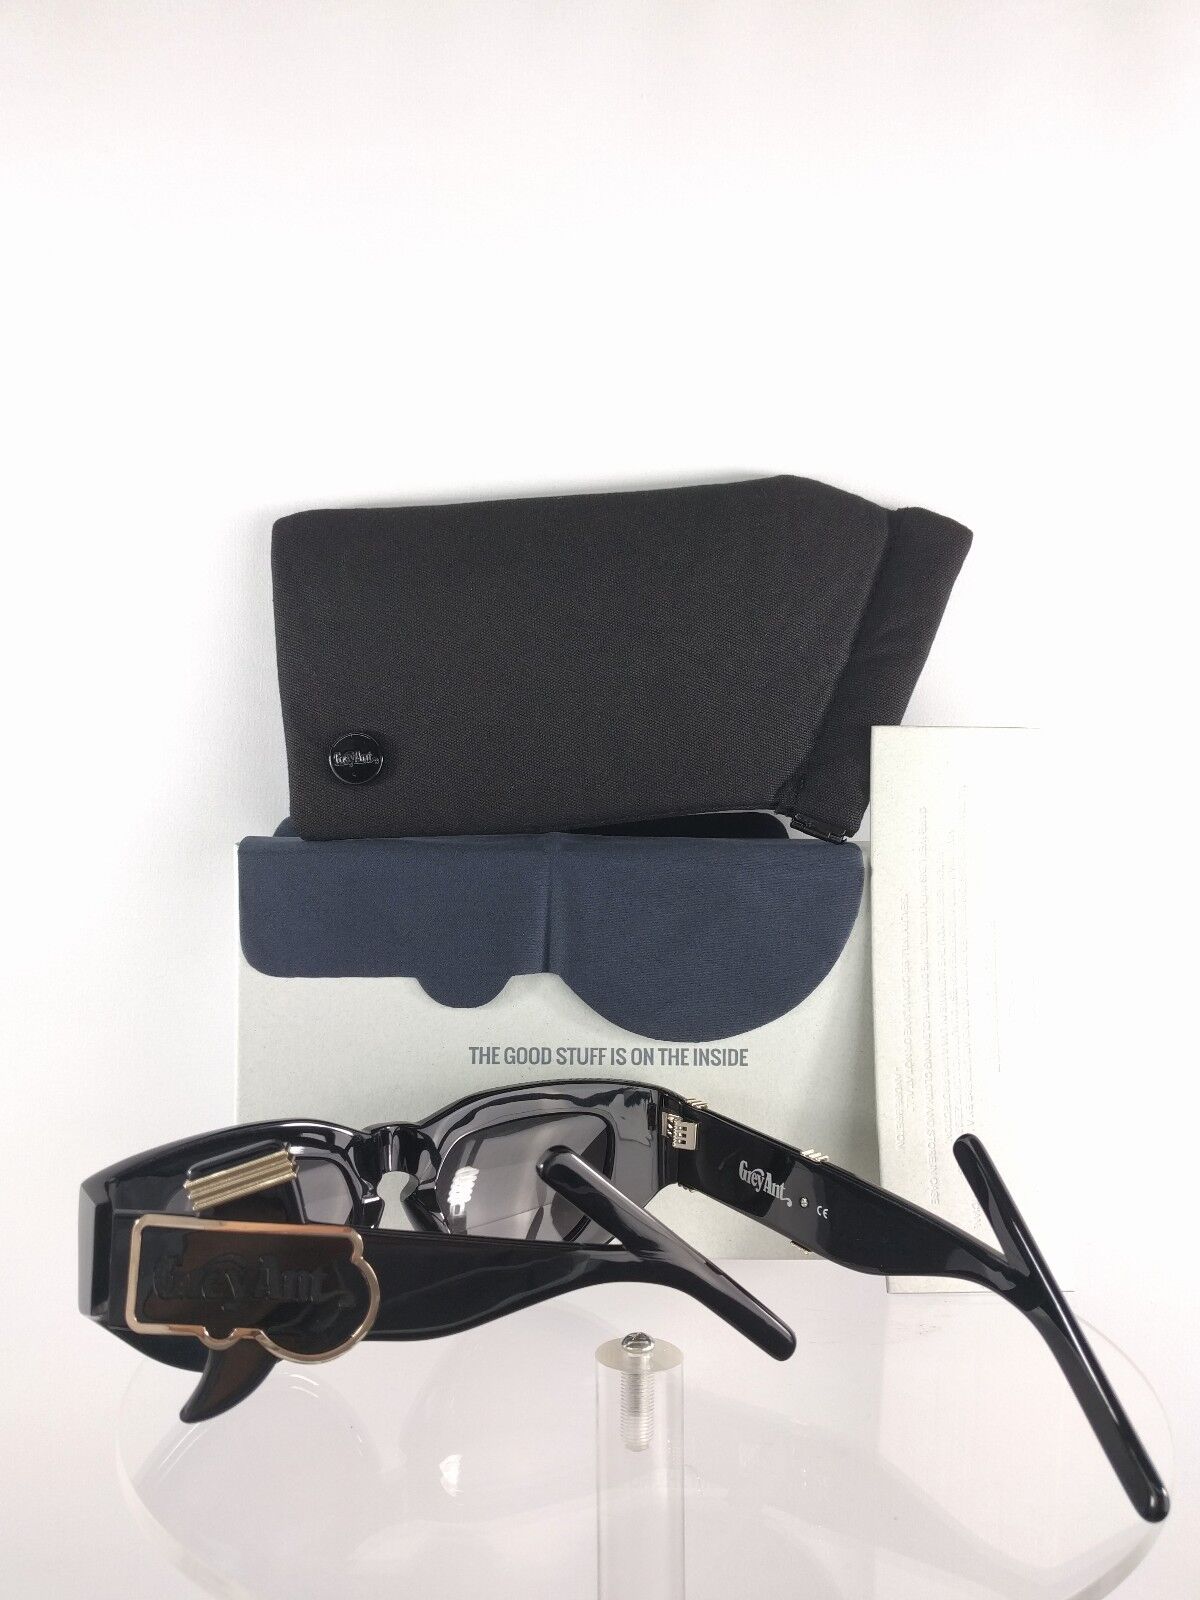 Brand New Authentic Grey Ant Sunglasses Carl Zeiss Optics Above Average Black